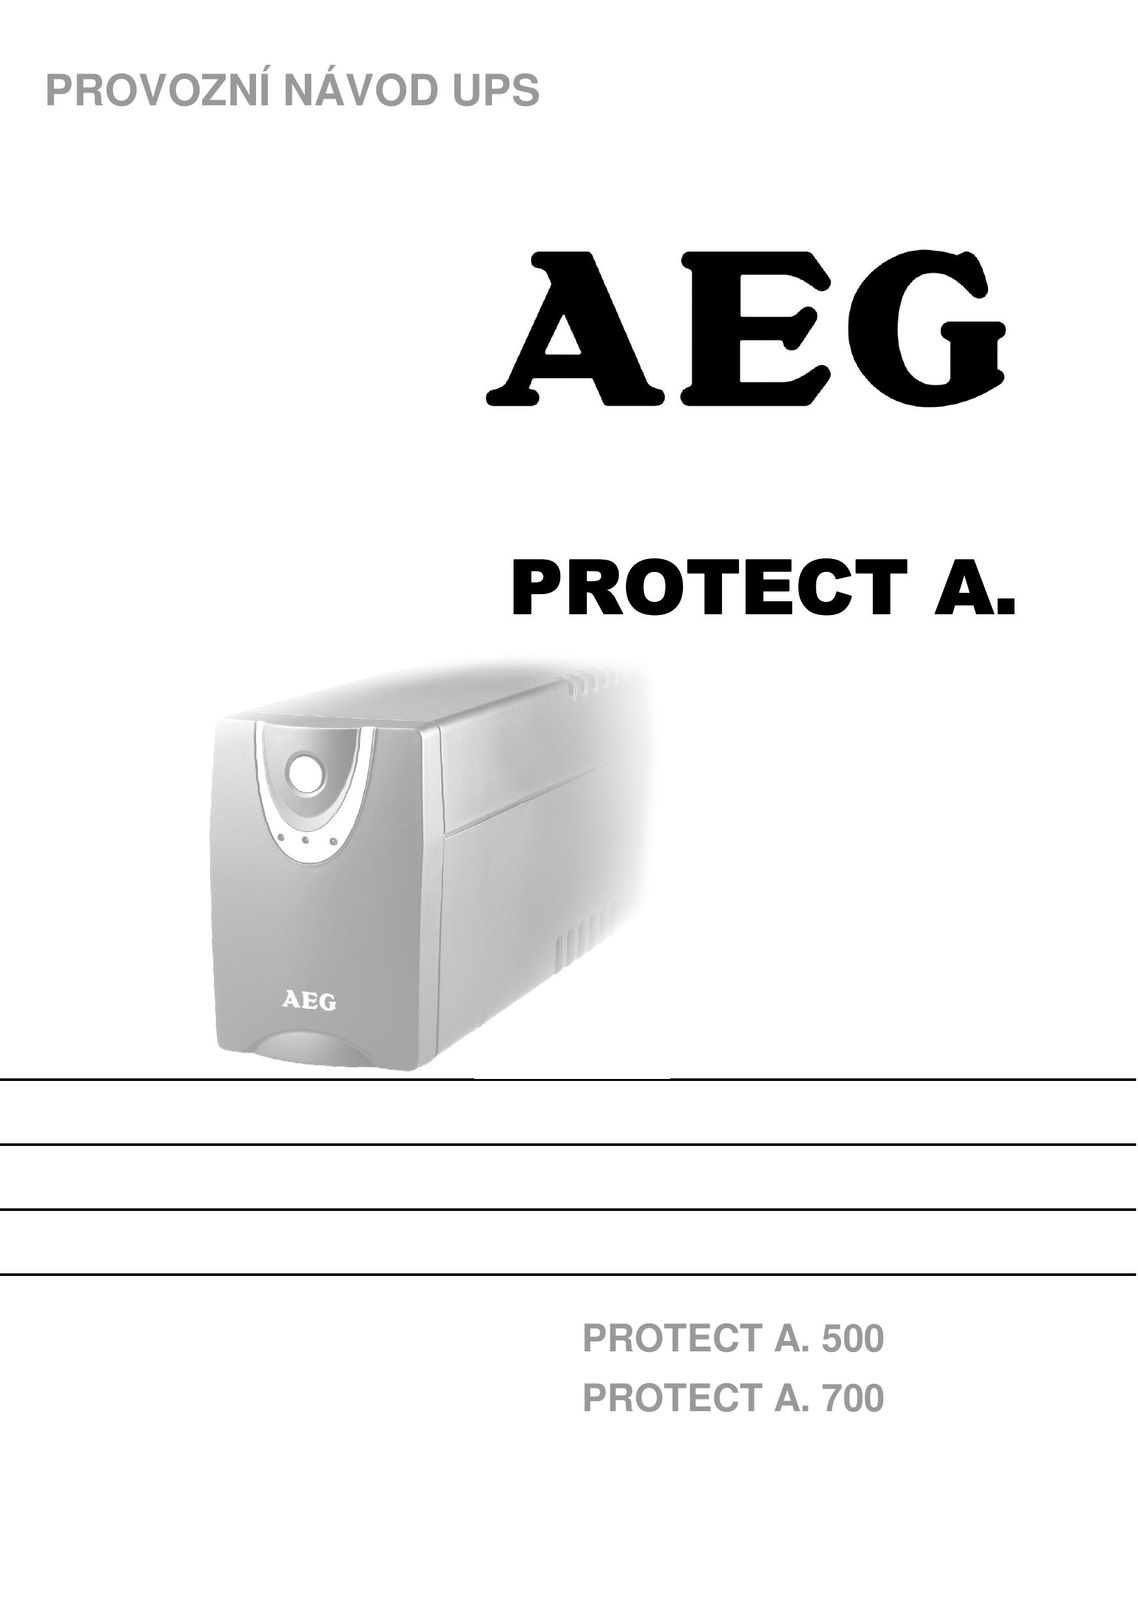 AEG PROTECT A. 500 Modem User Manual